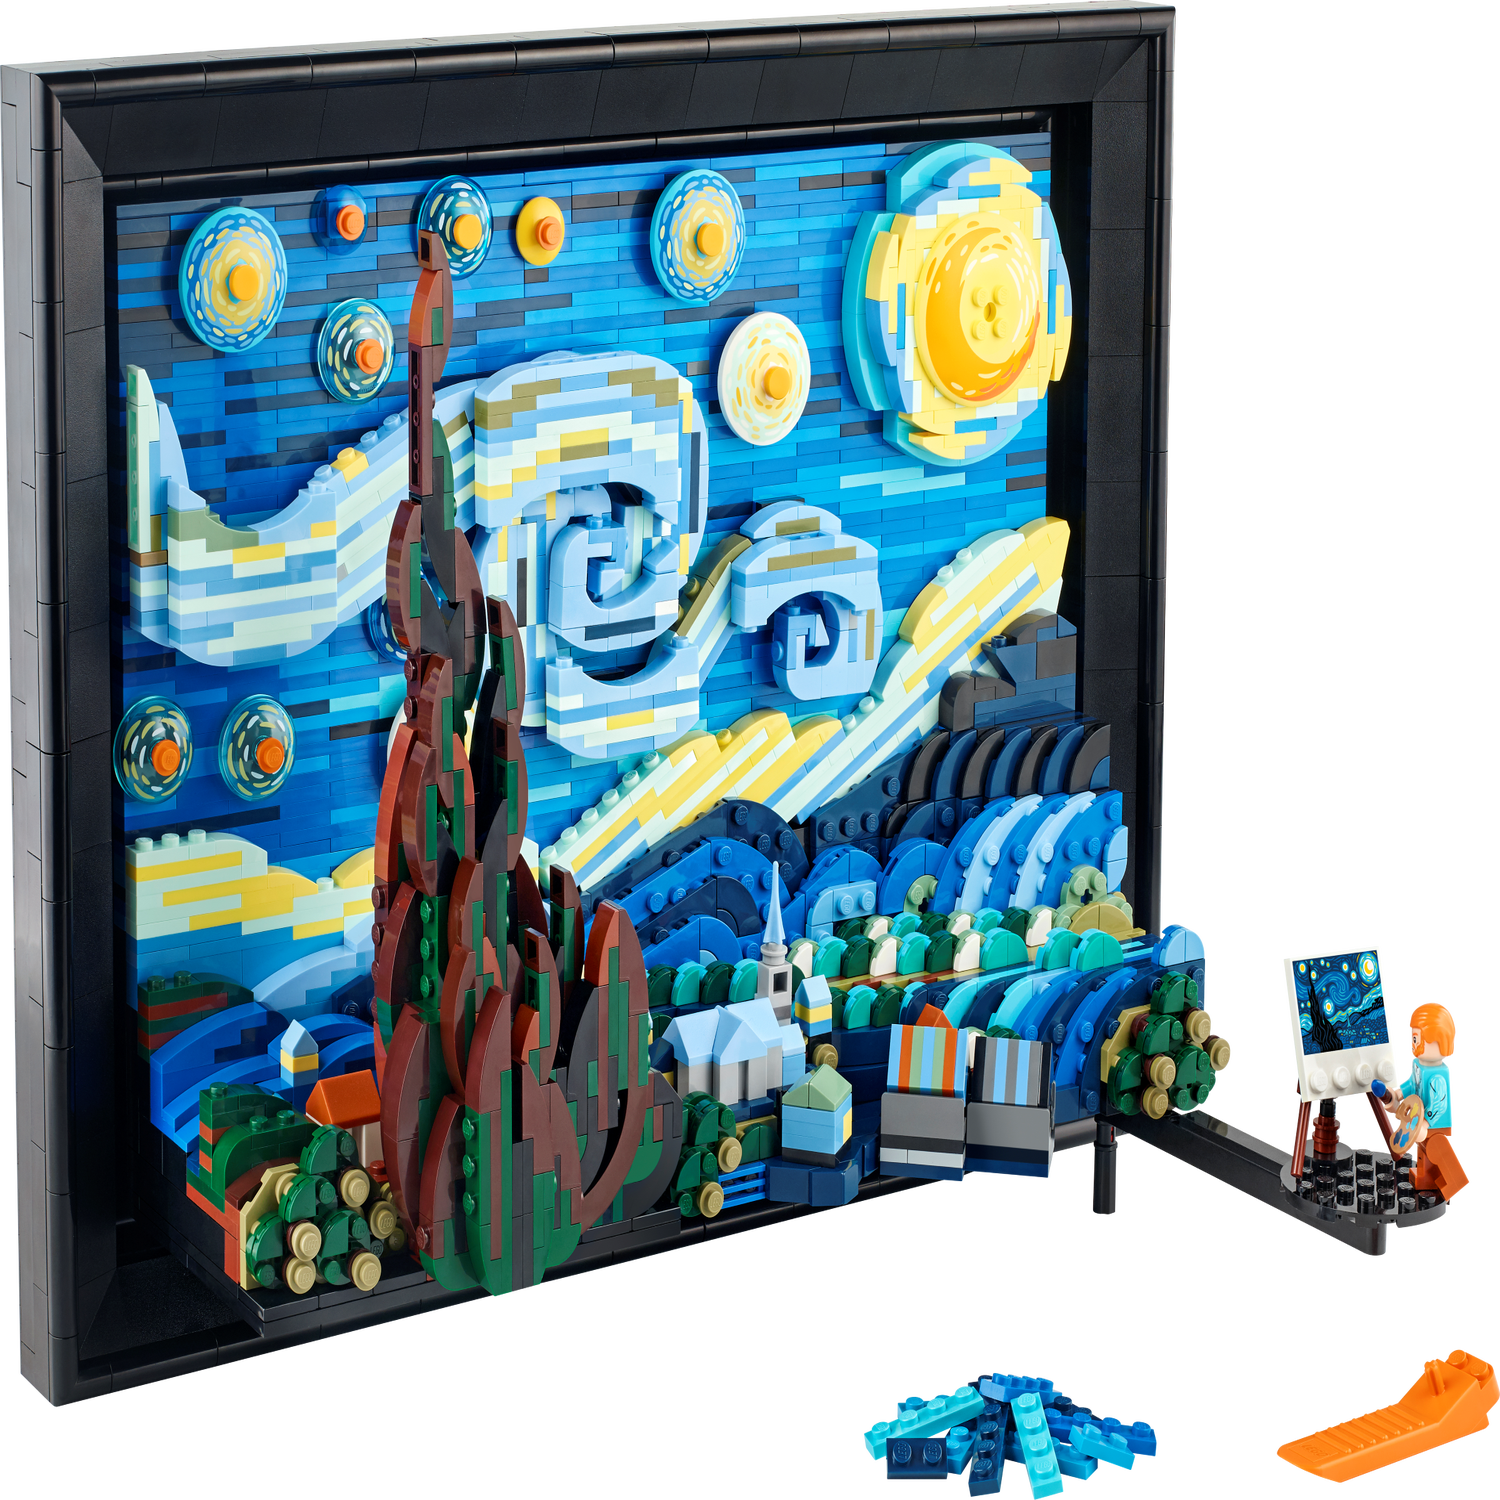 LEGO Vincent van Gogh - The Starry Night Set 21333 Instructions